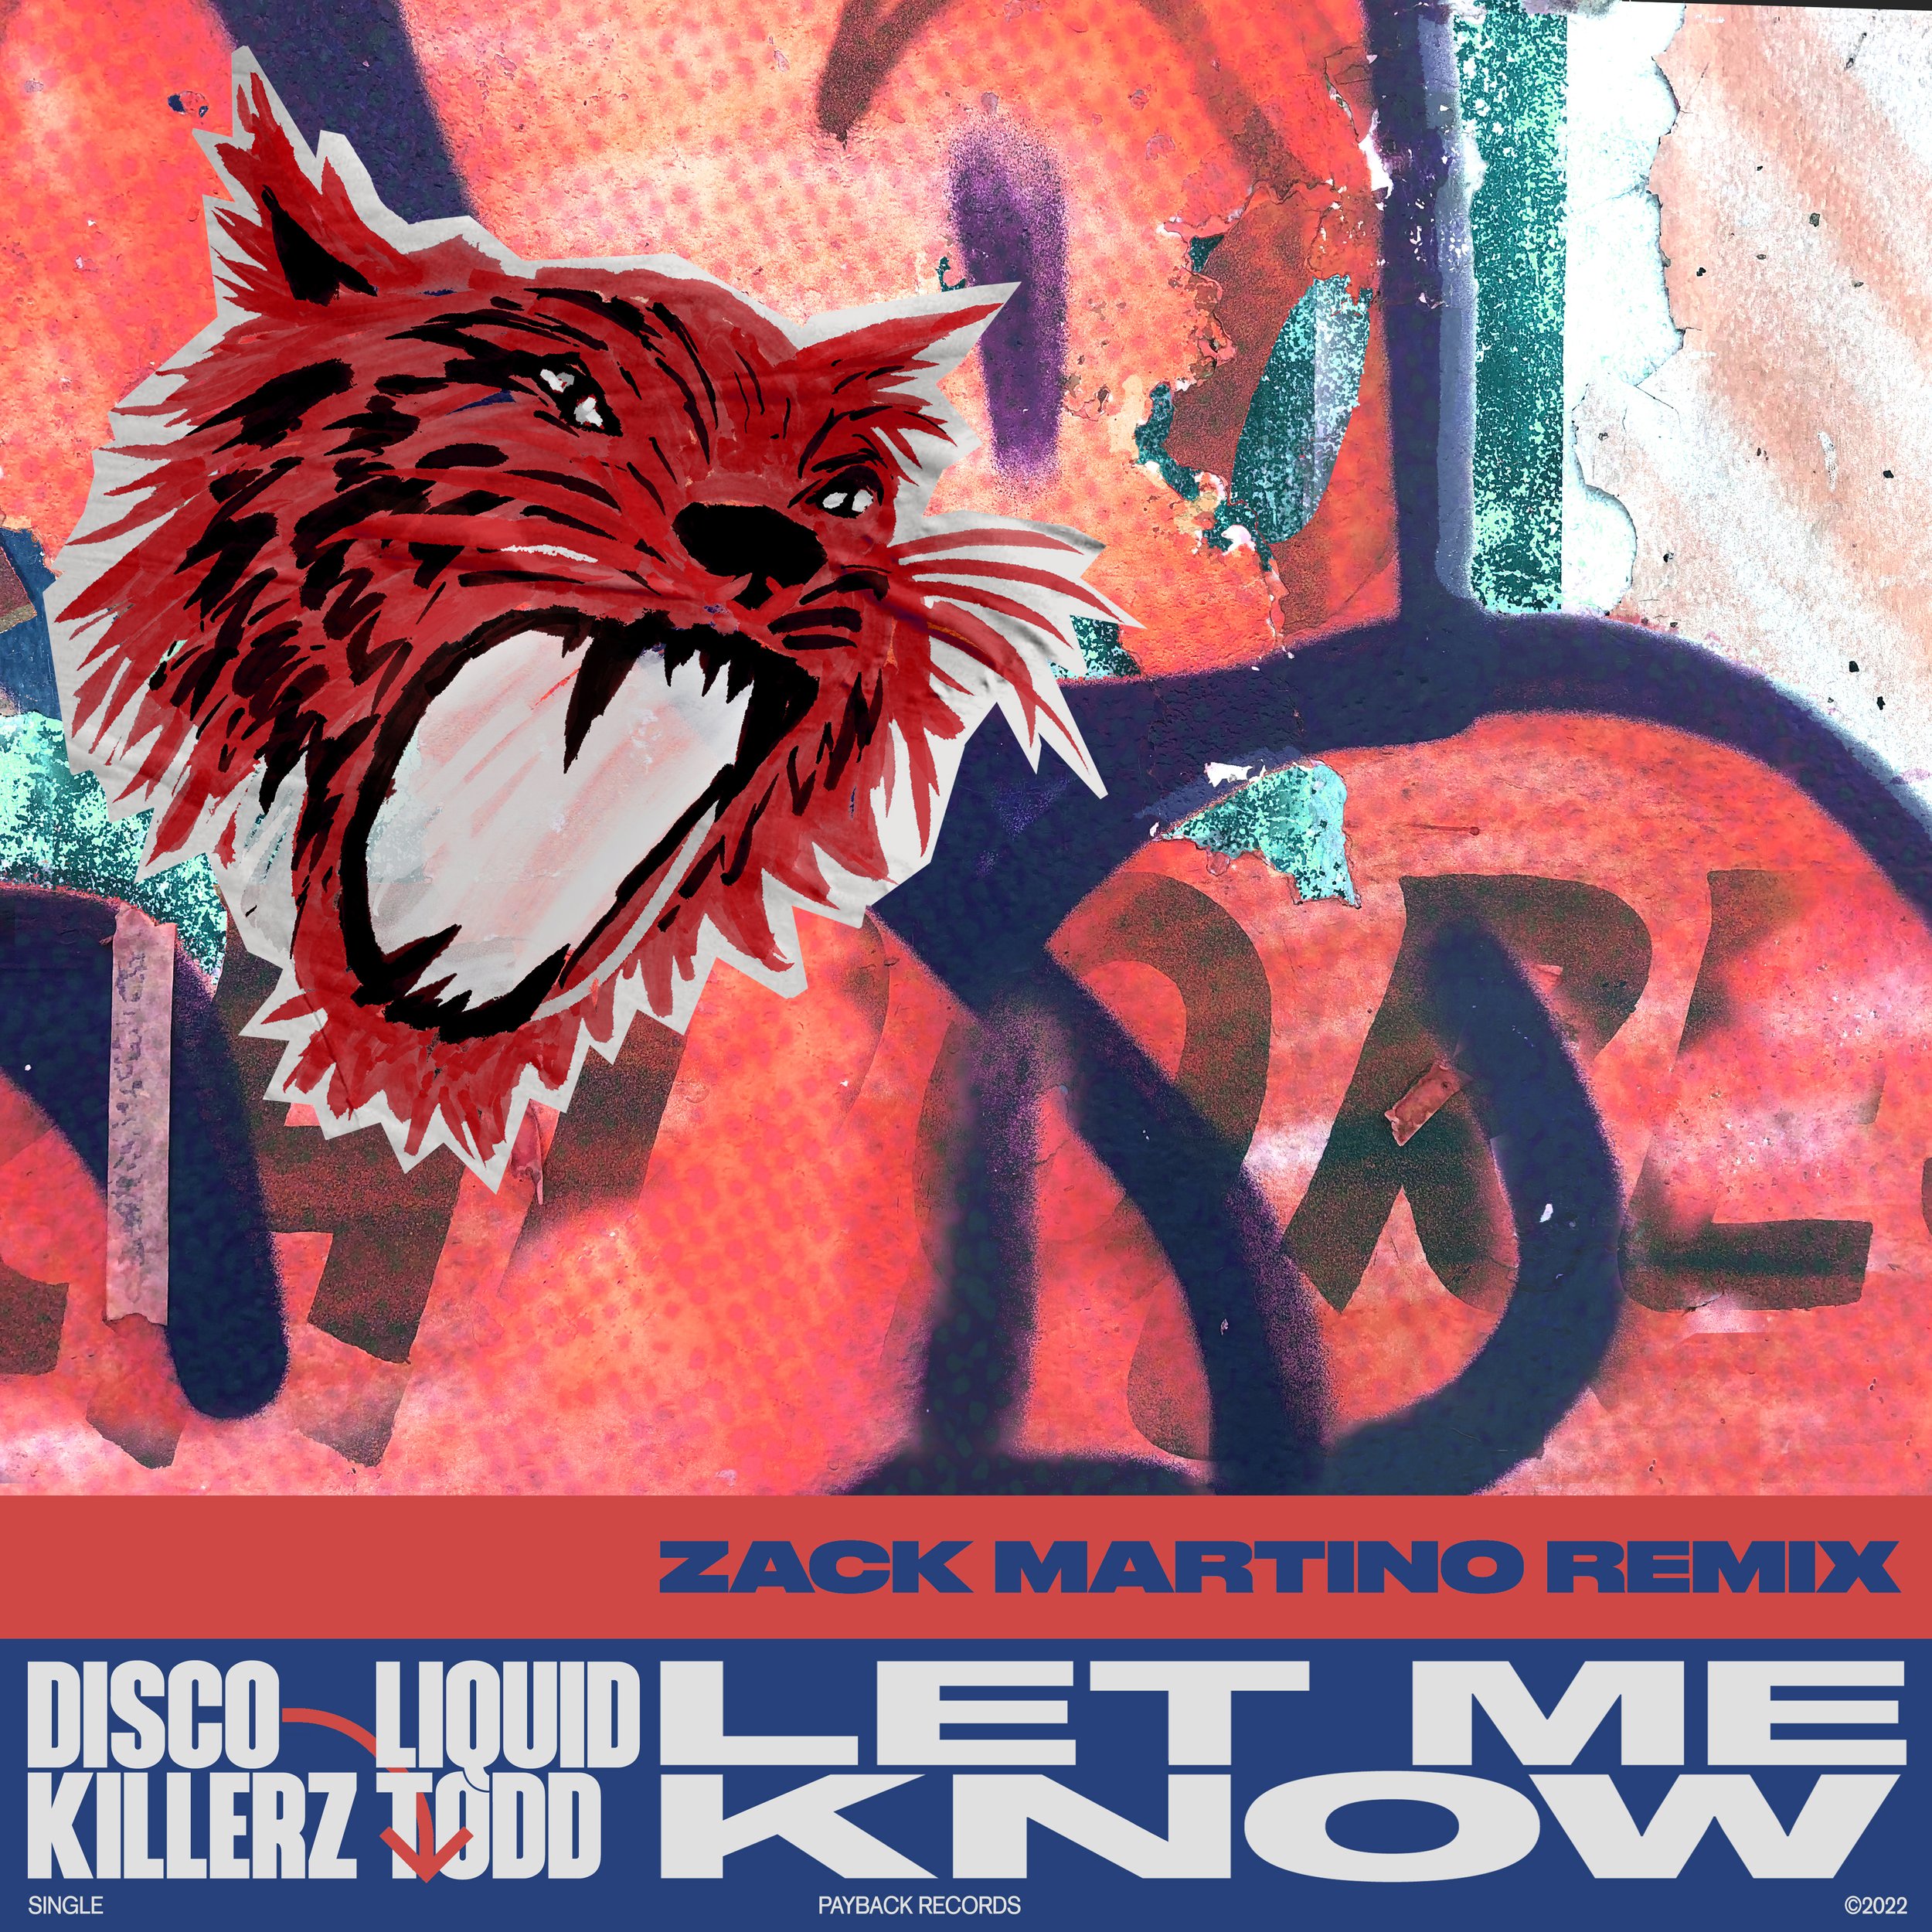 Let Me Know Cover Artwork - Zack Martino Remix.jpg